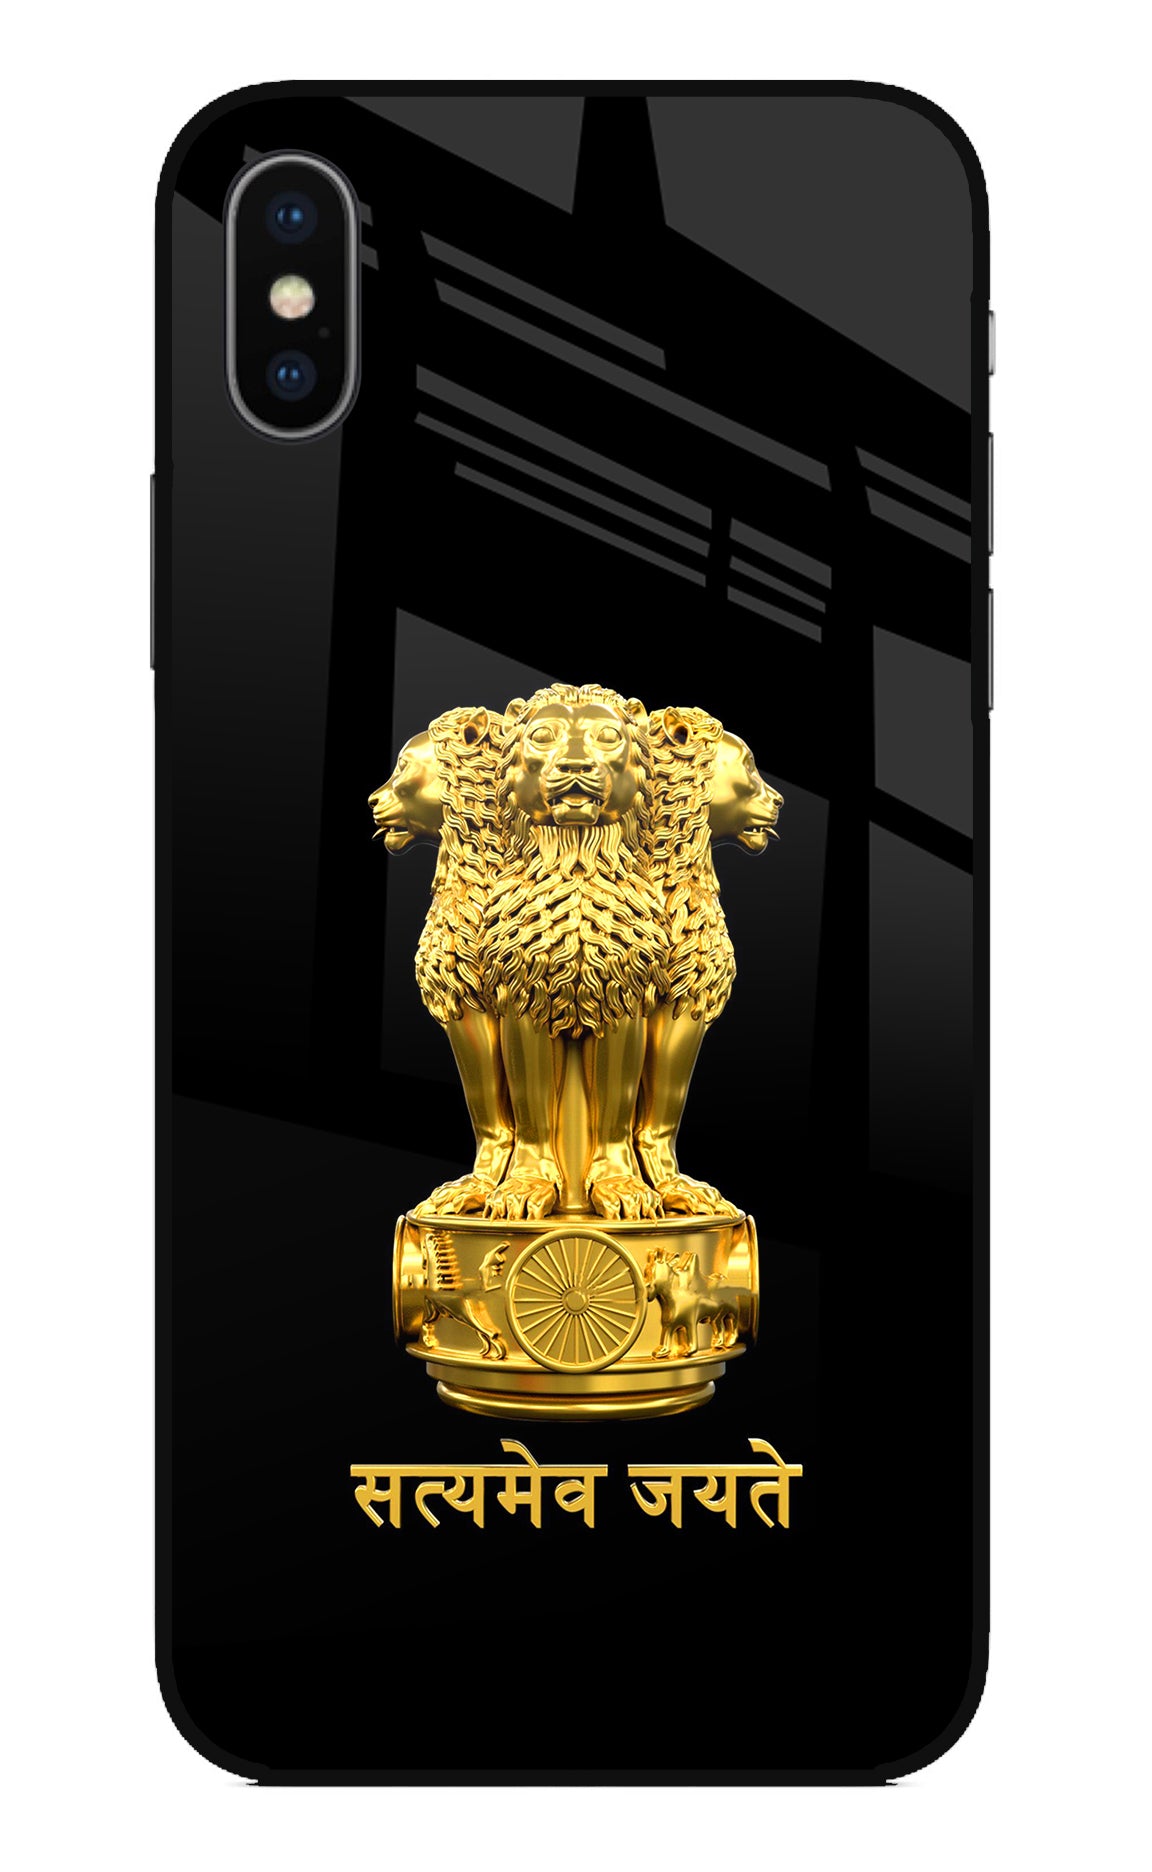 Satyamev Jayate Golden iPhone X Back Cover